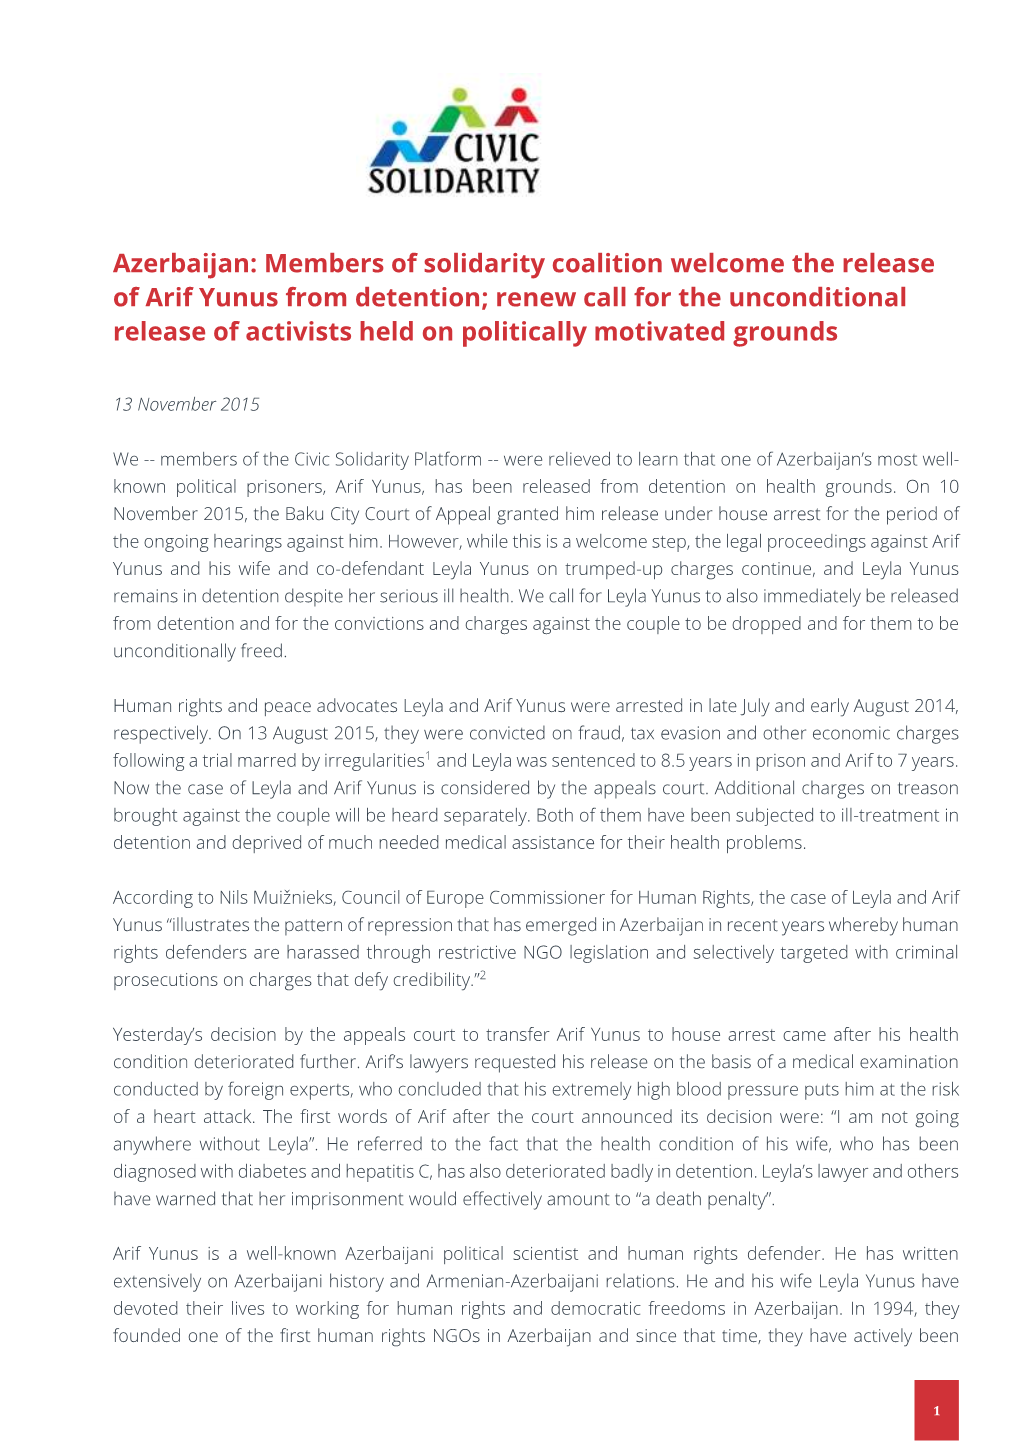 Members of Solidarity Coalition Welcome the Release of Arif Yunus